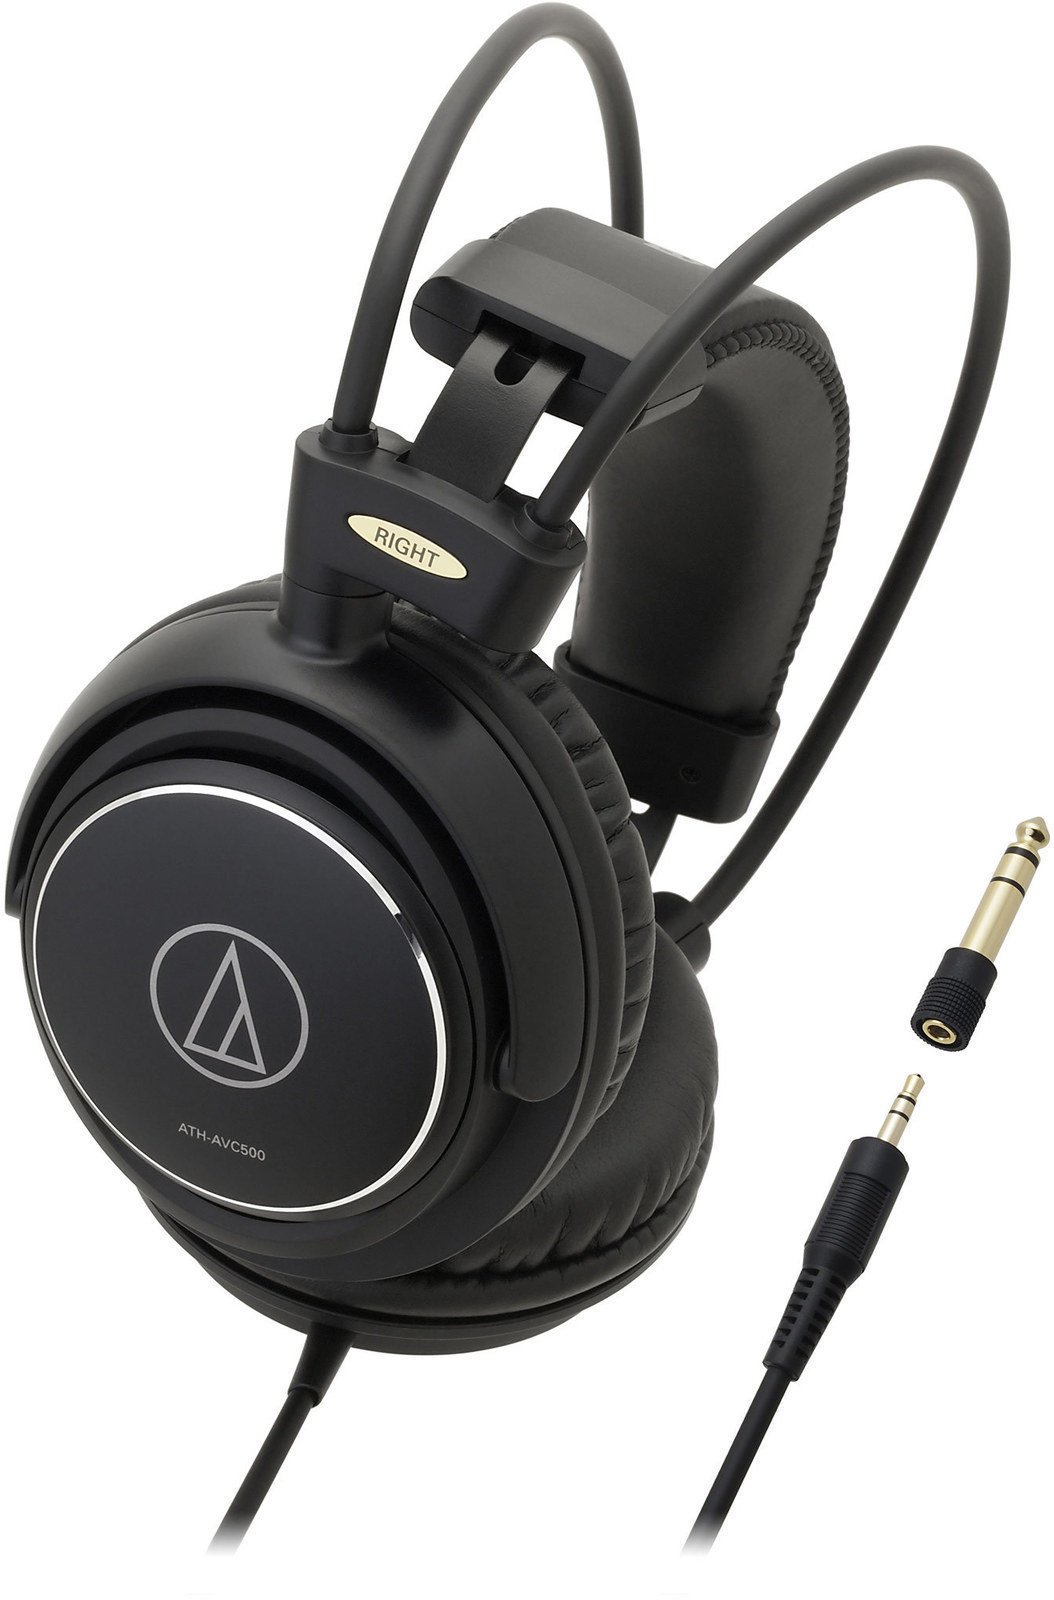 Hi-Fi Headphones Audio-Technica ATH-AVC500